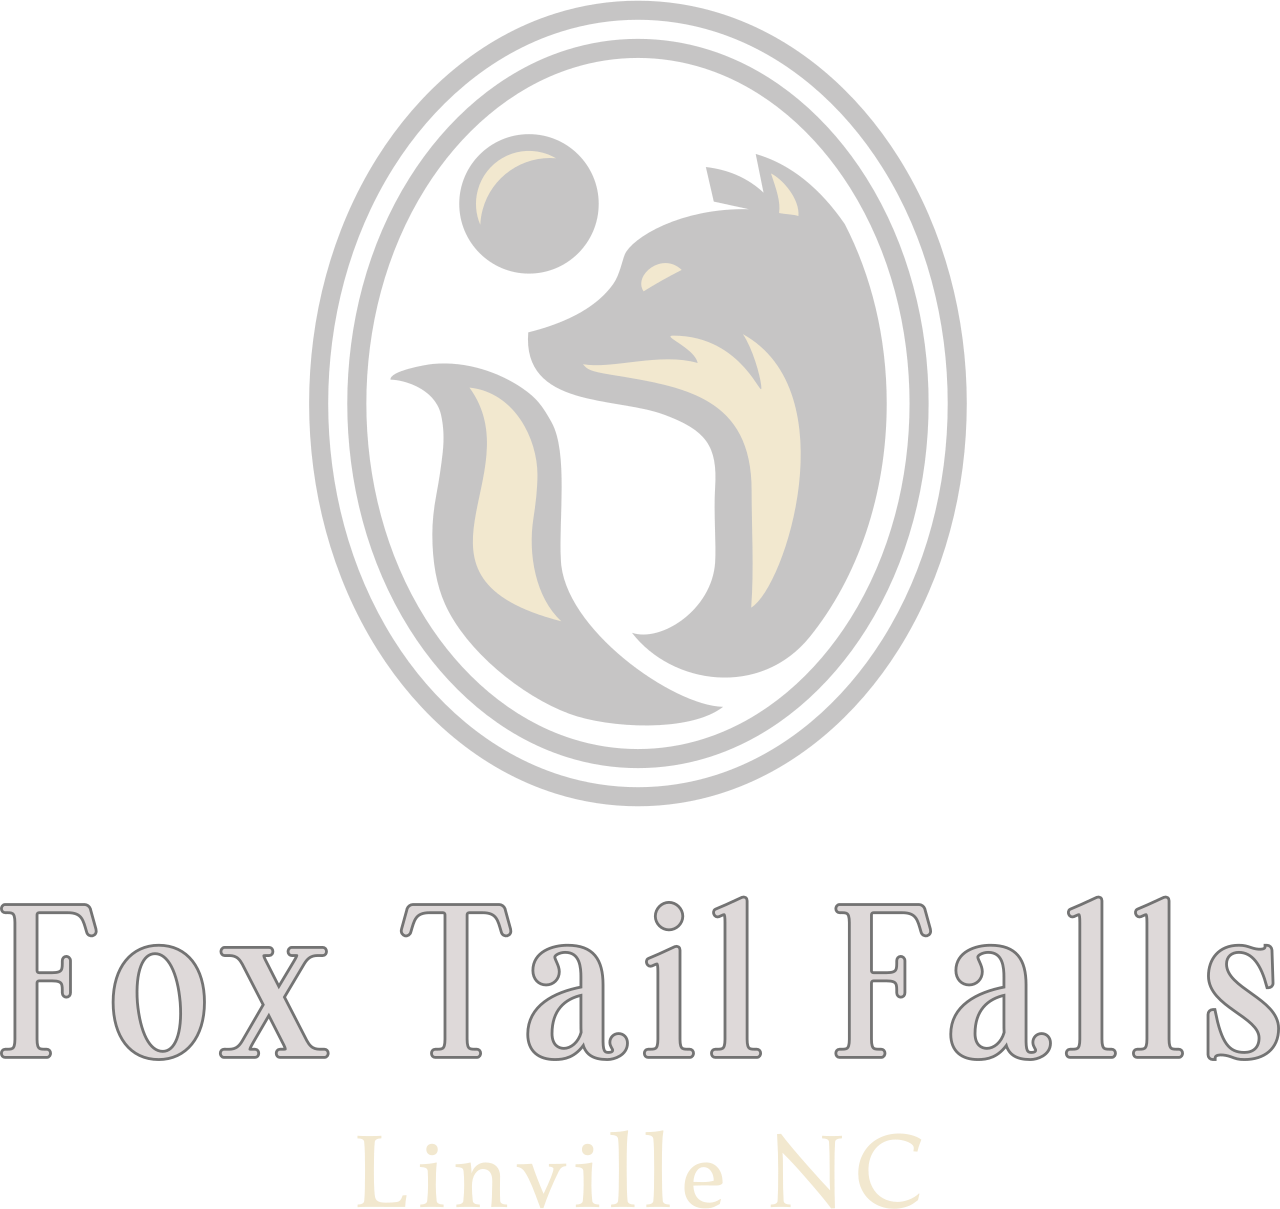 Fox Tail Falls's logo